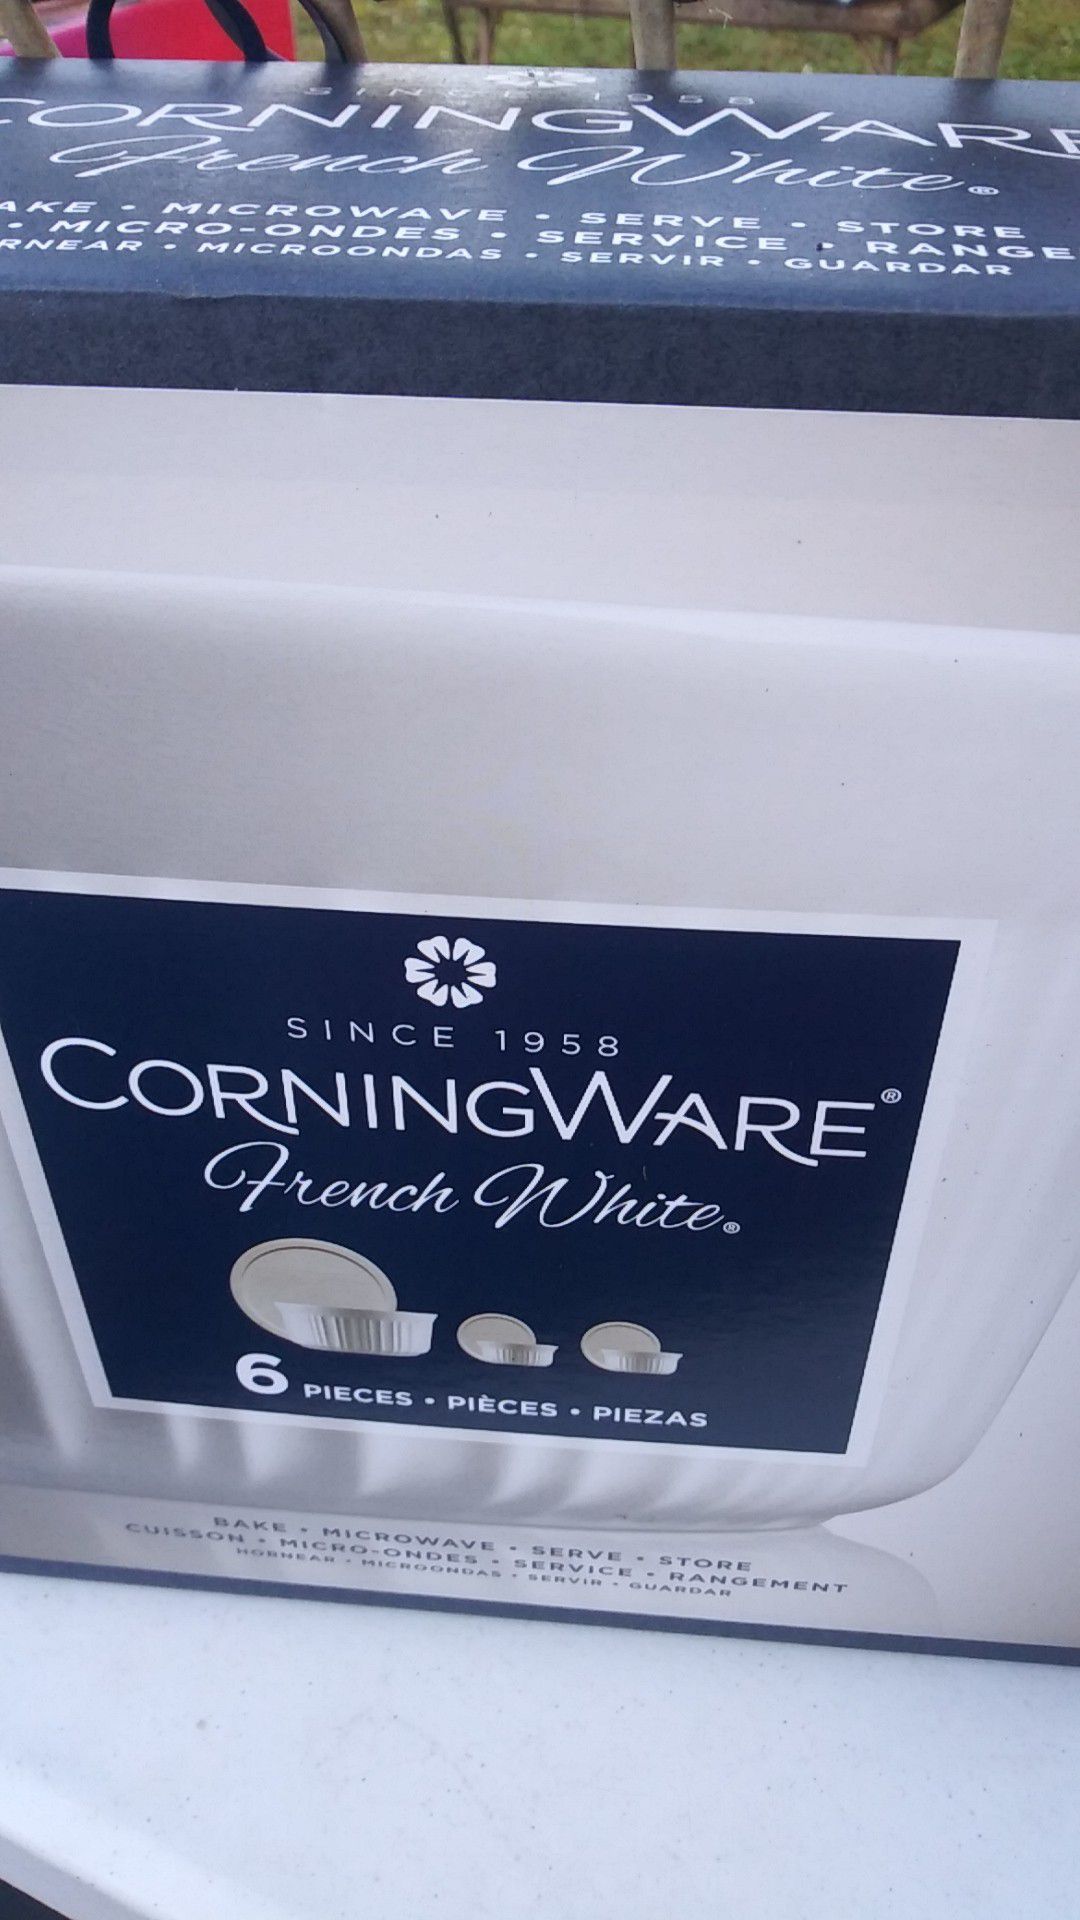 CorningWare brand new 6 price set